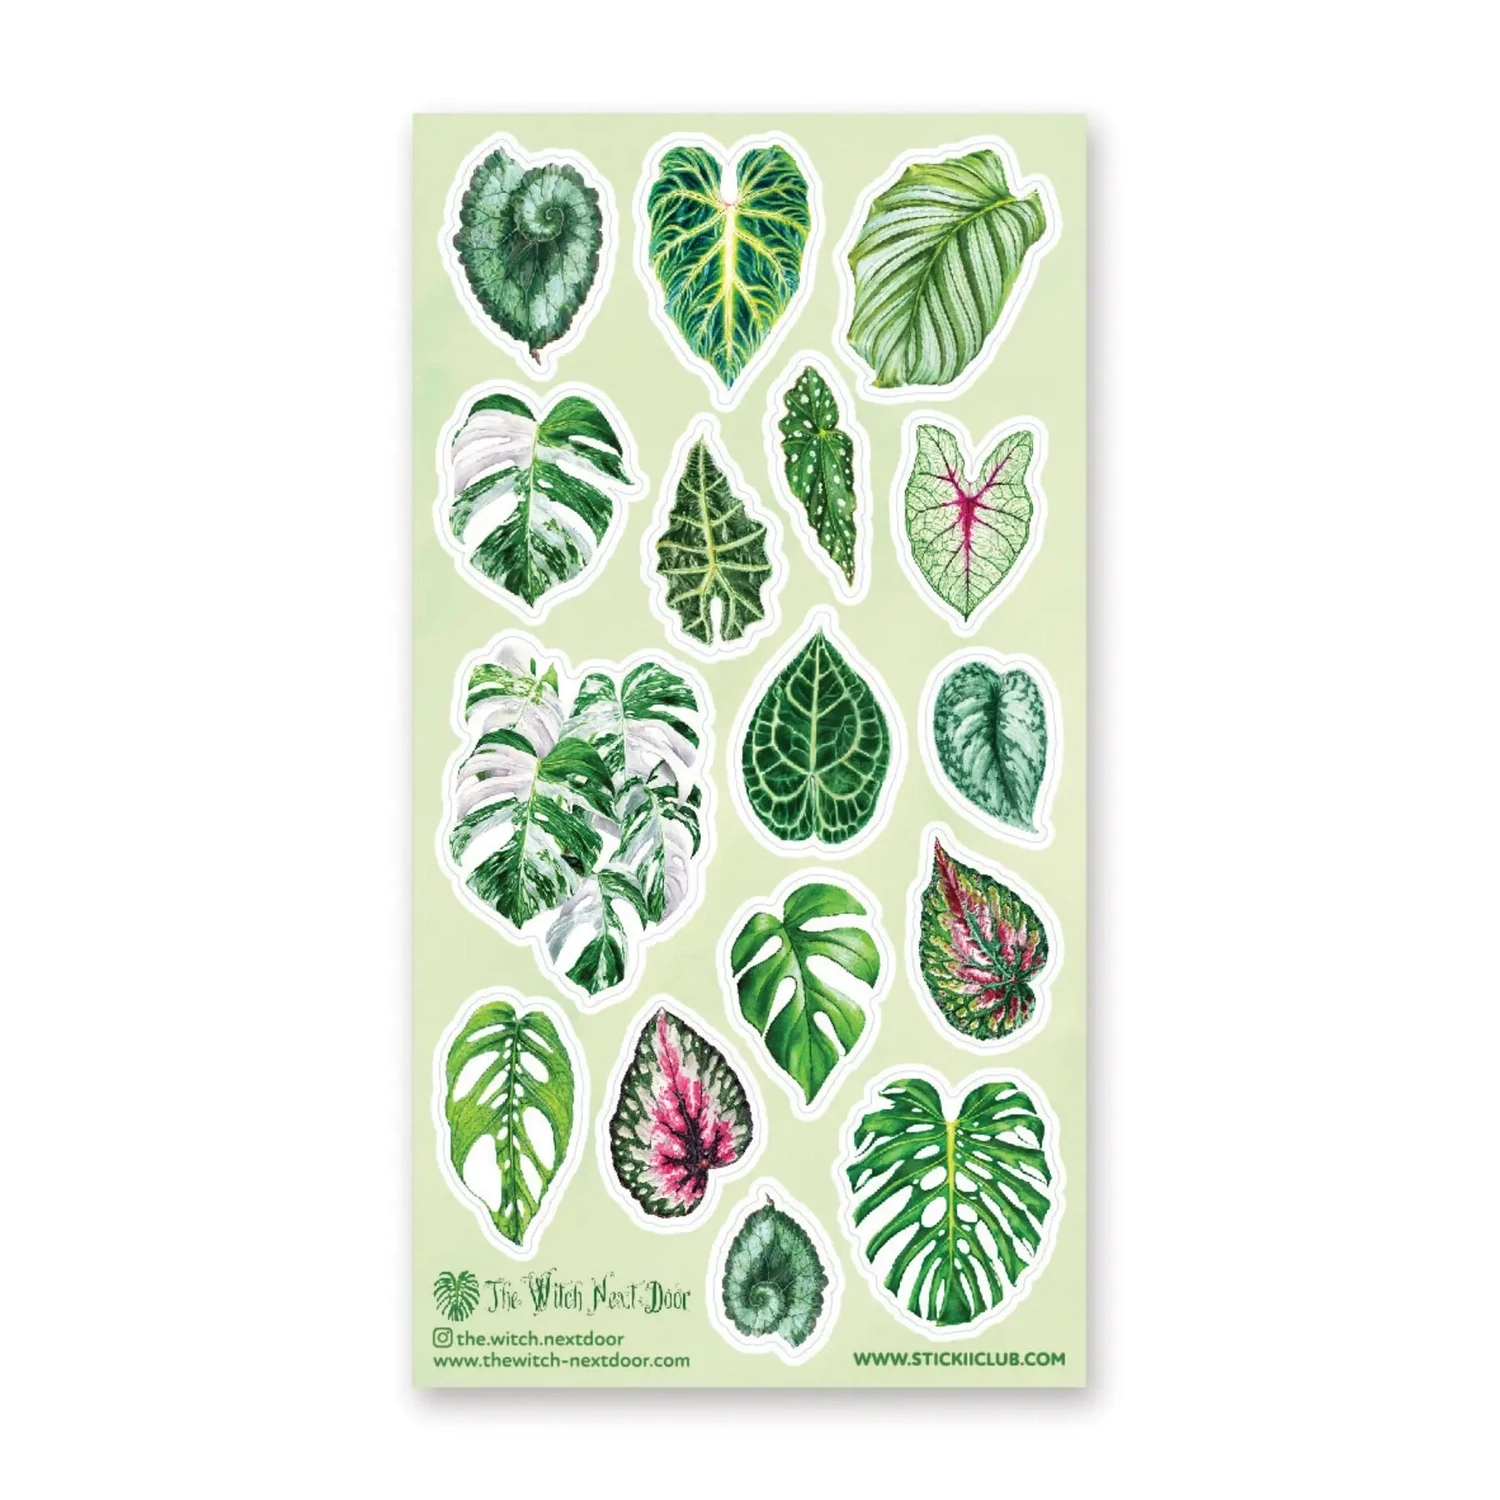 F Stickii Gorgeous Greens Sticker Sheets